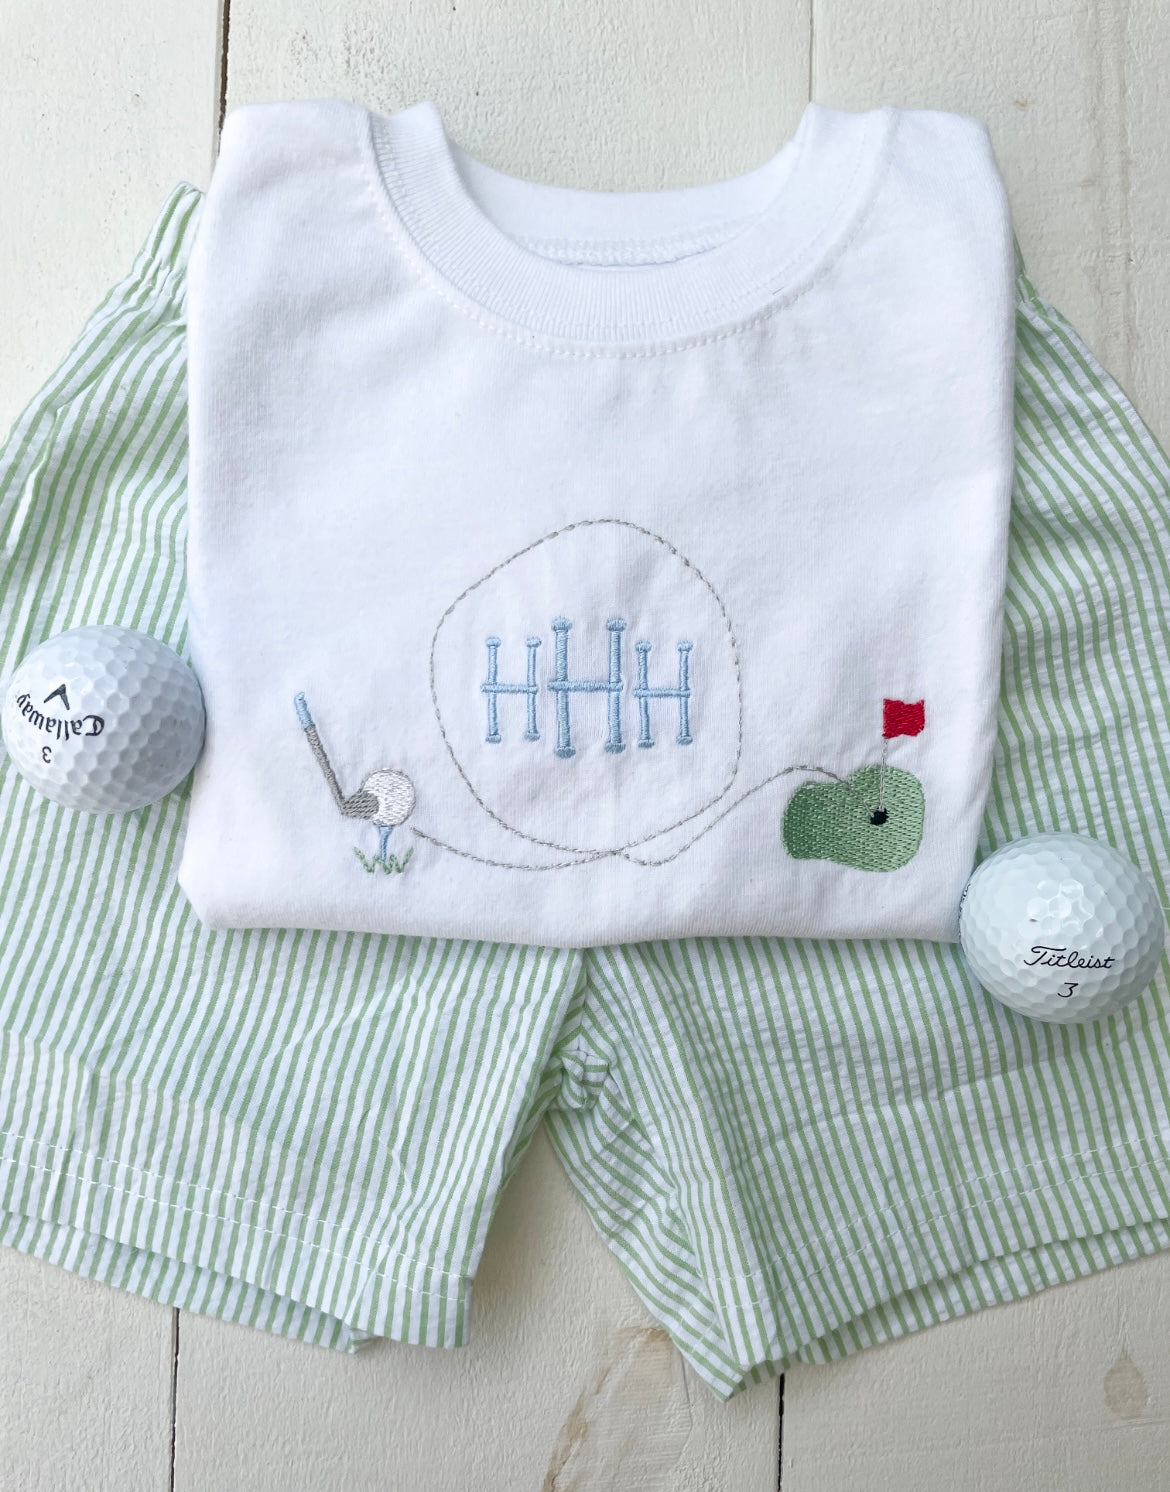 Golf Monogram Frame Shirt/Onesie